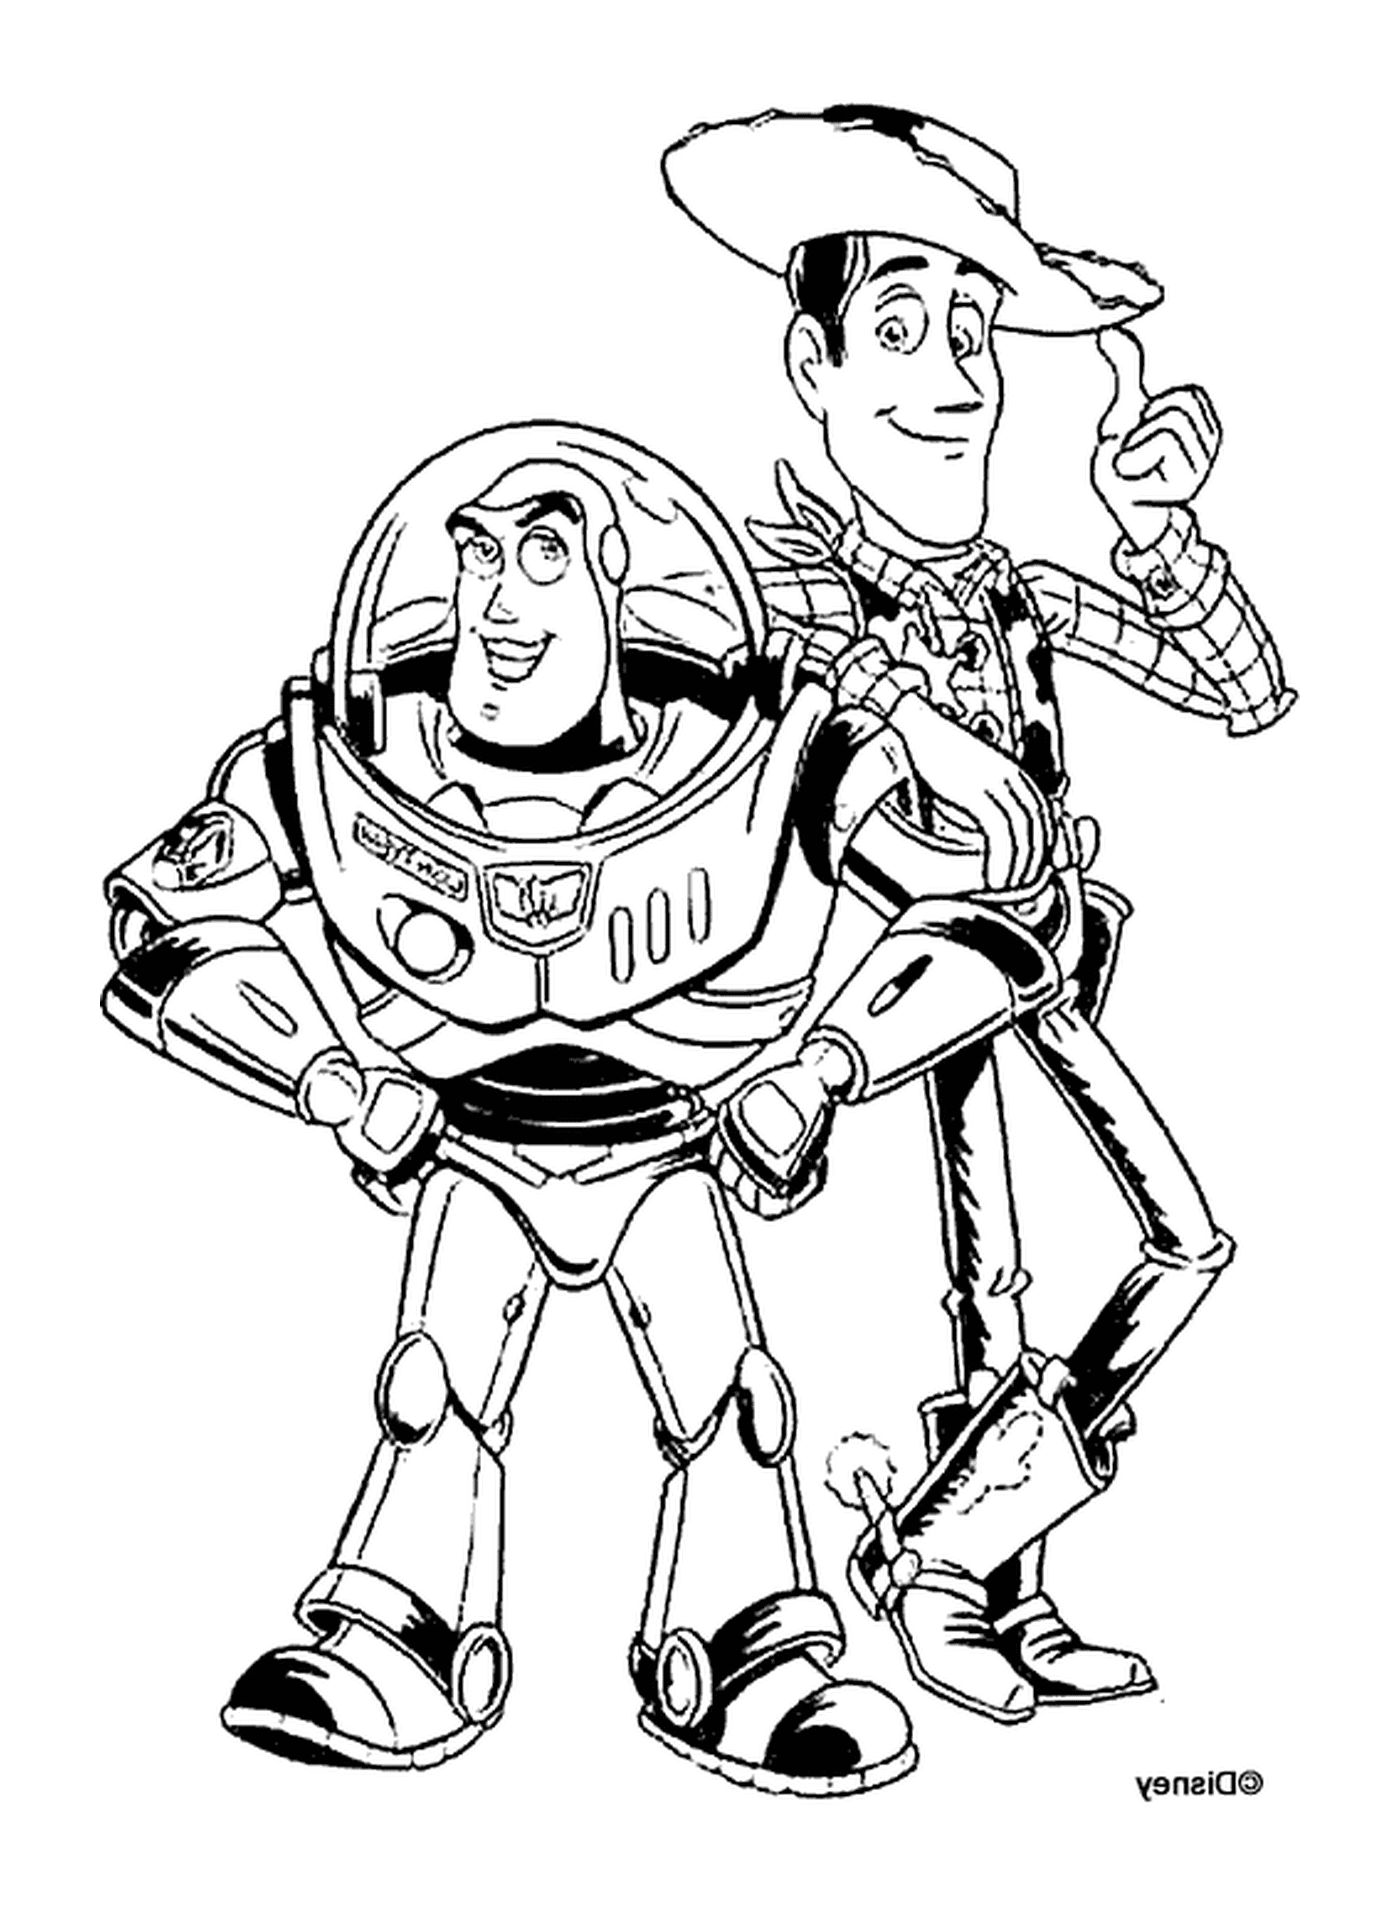  Buzz the Light y Woody, dúo legendario 